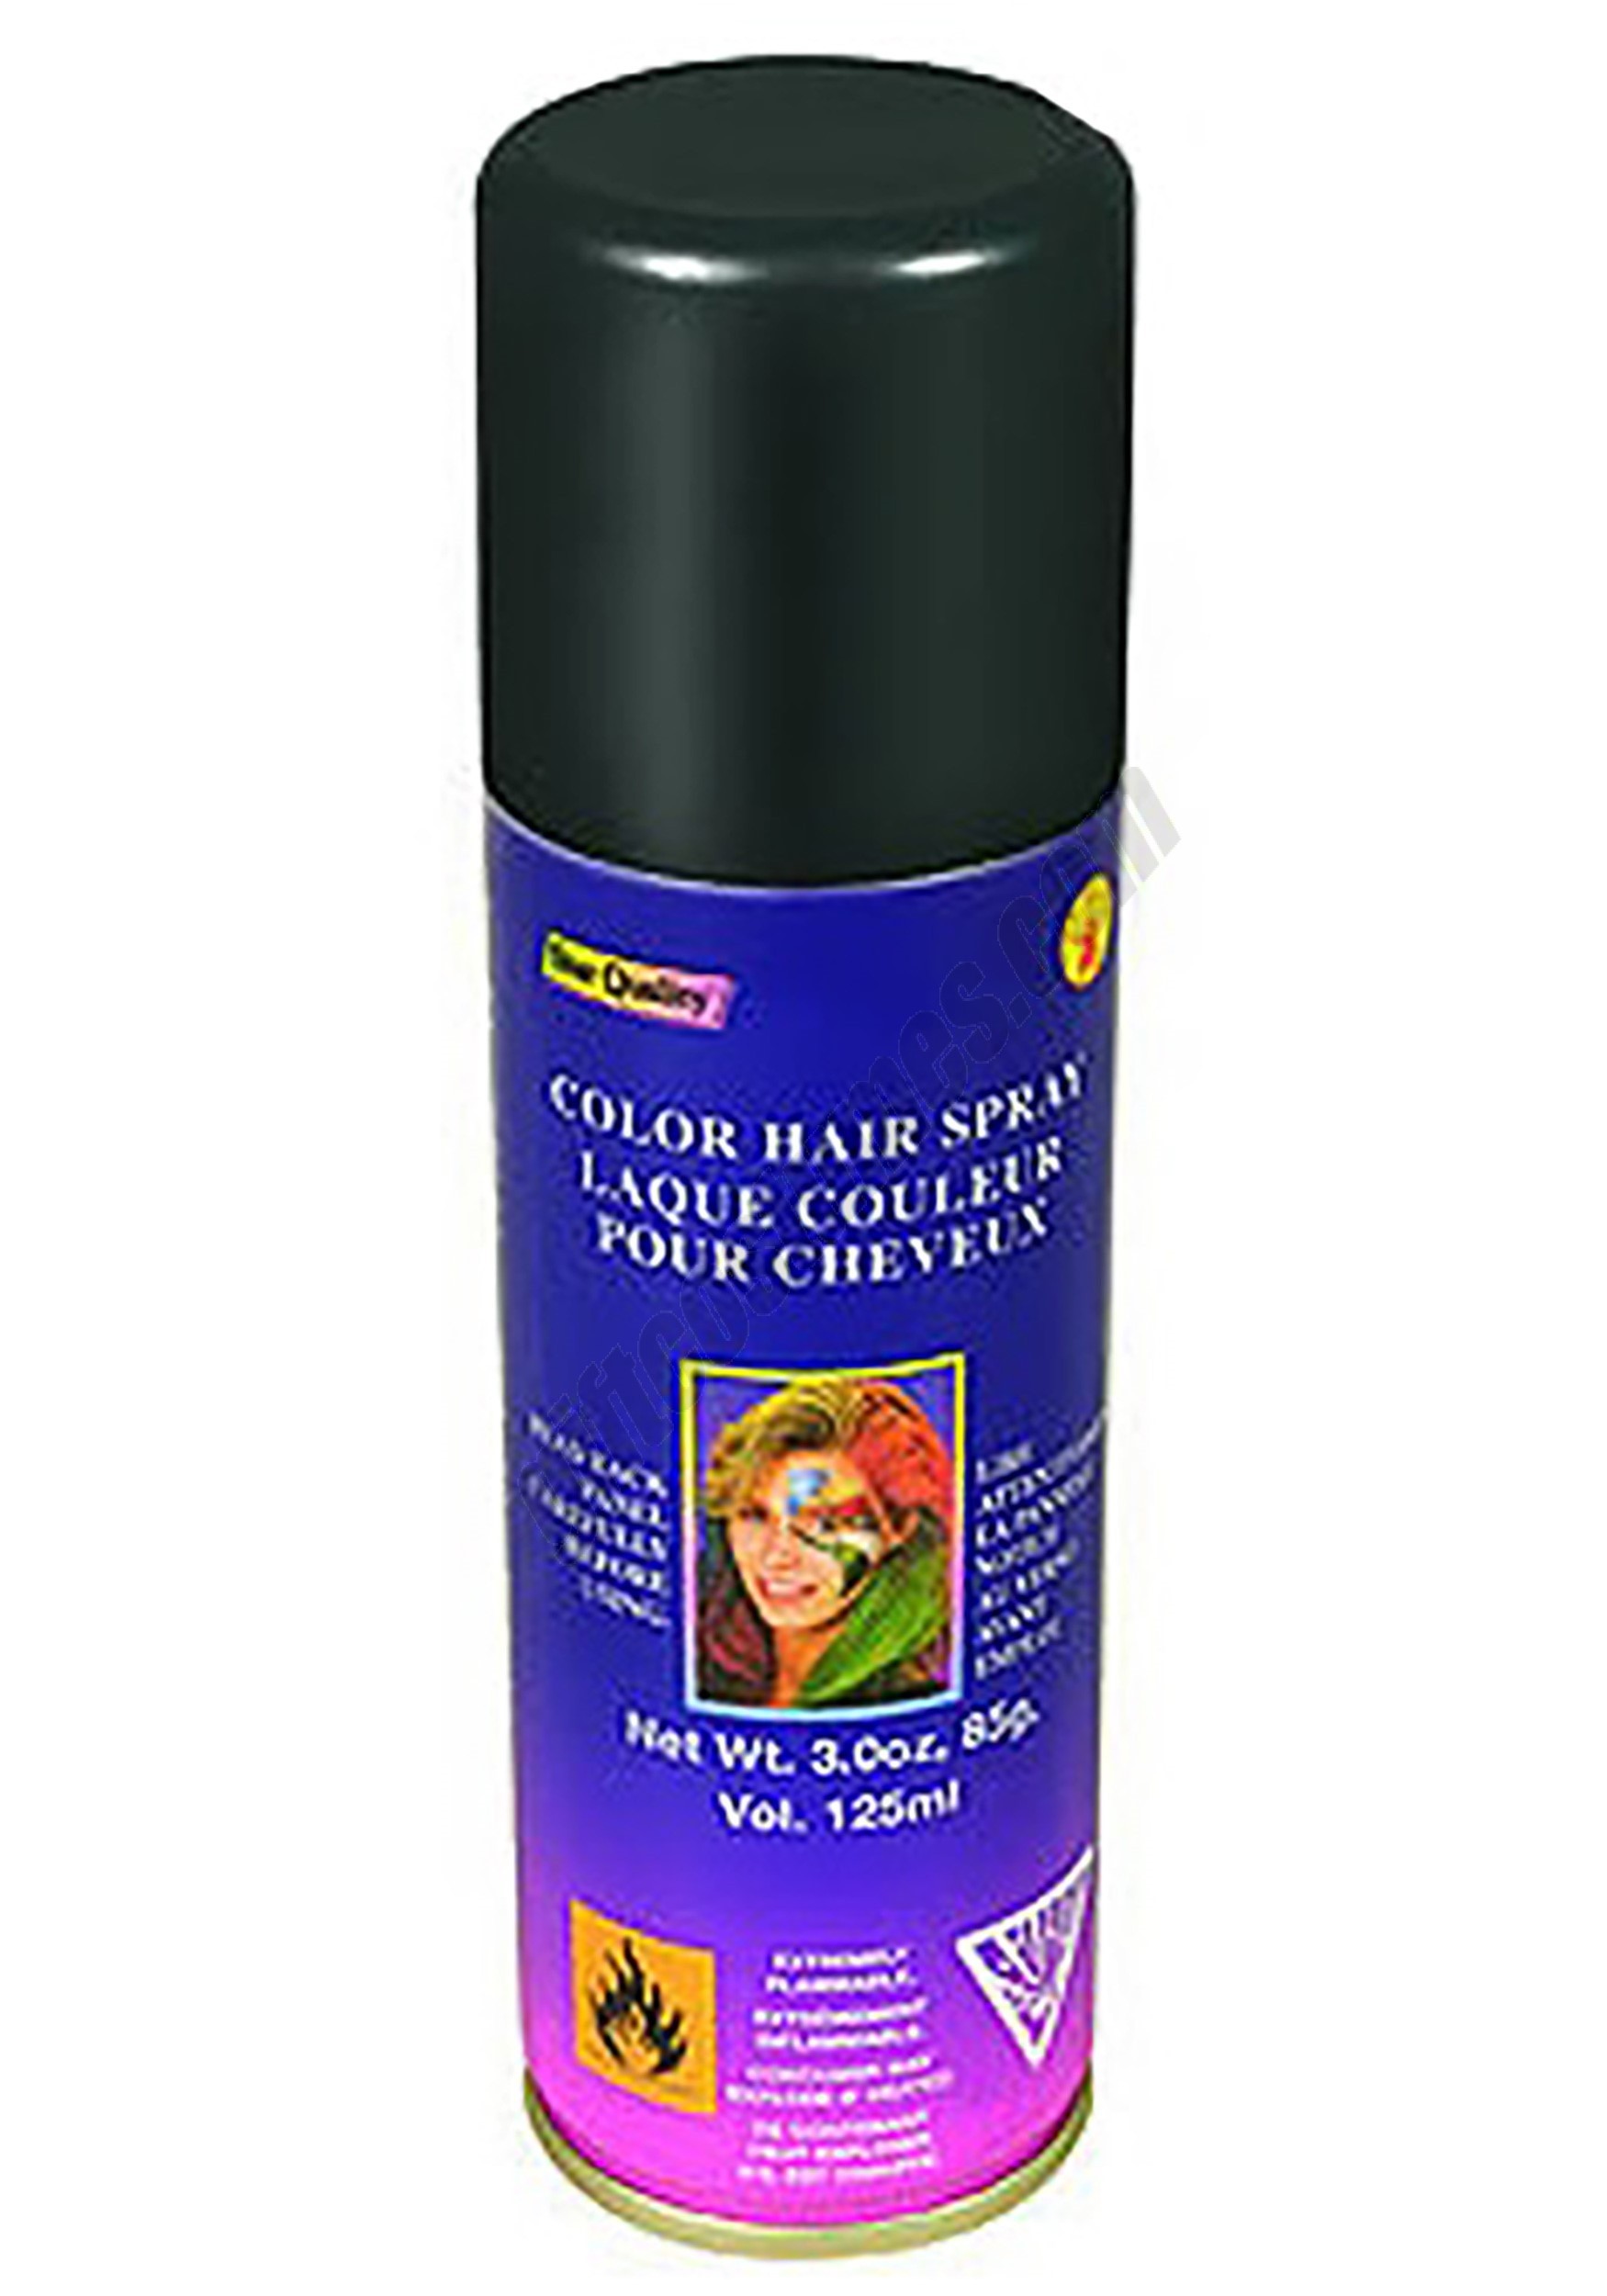 Black Hair Spray Promotions - Black Hair Spray Promotions